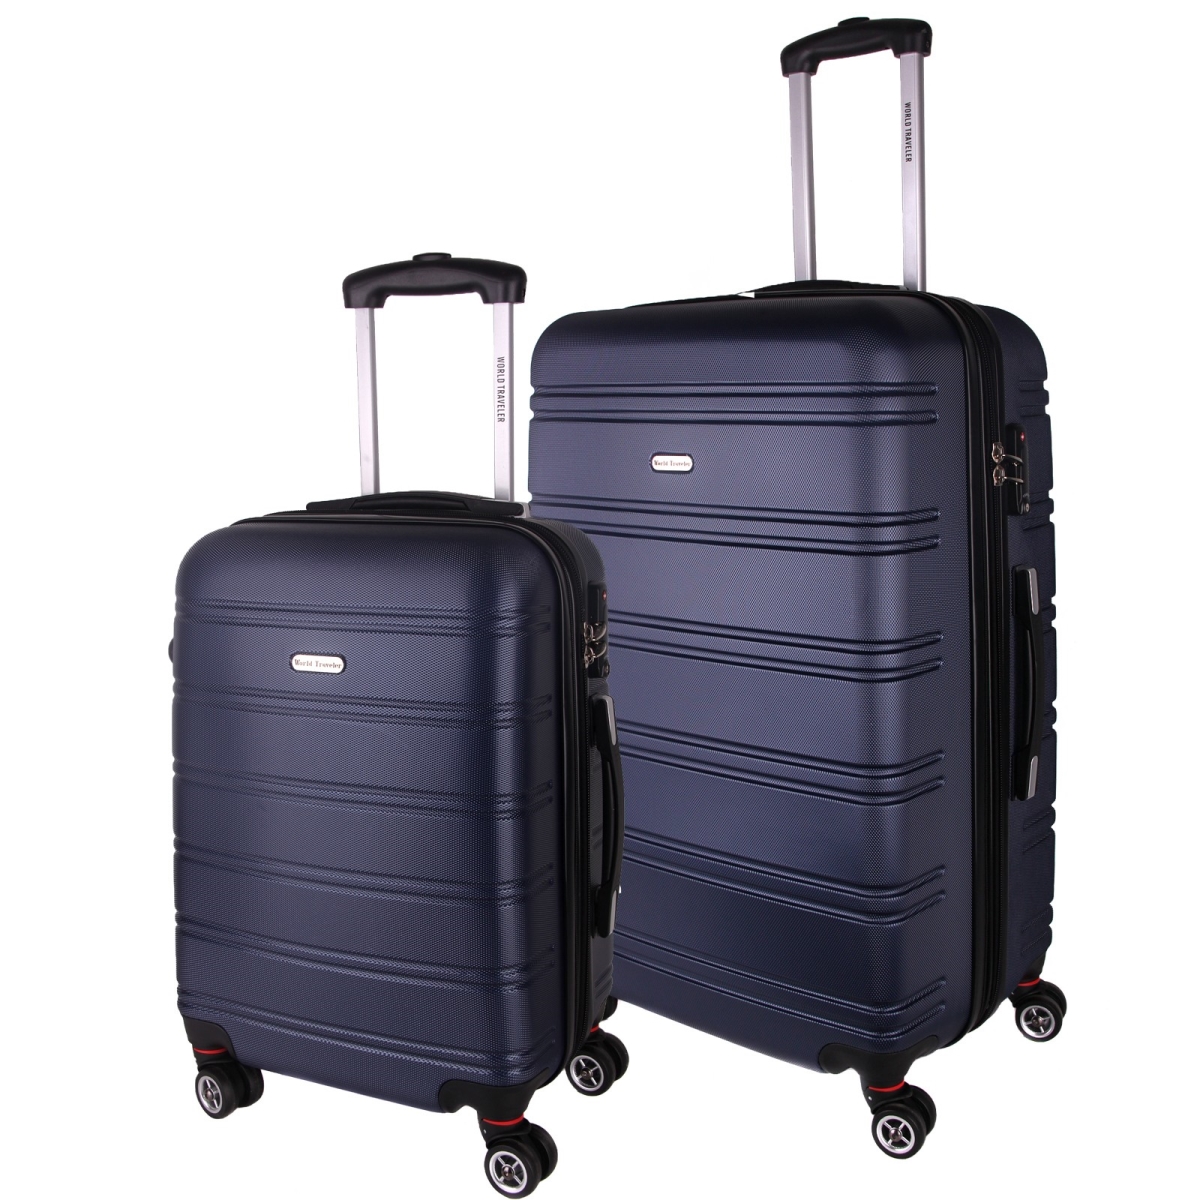 Wtc1101-2-blue Bristol Ii Hardside 2-piece Spinner Luggage Set, Blue